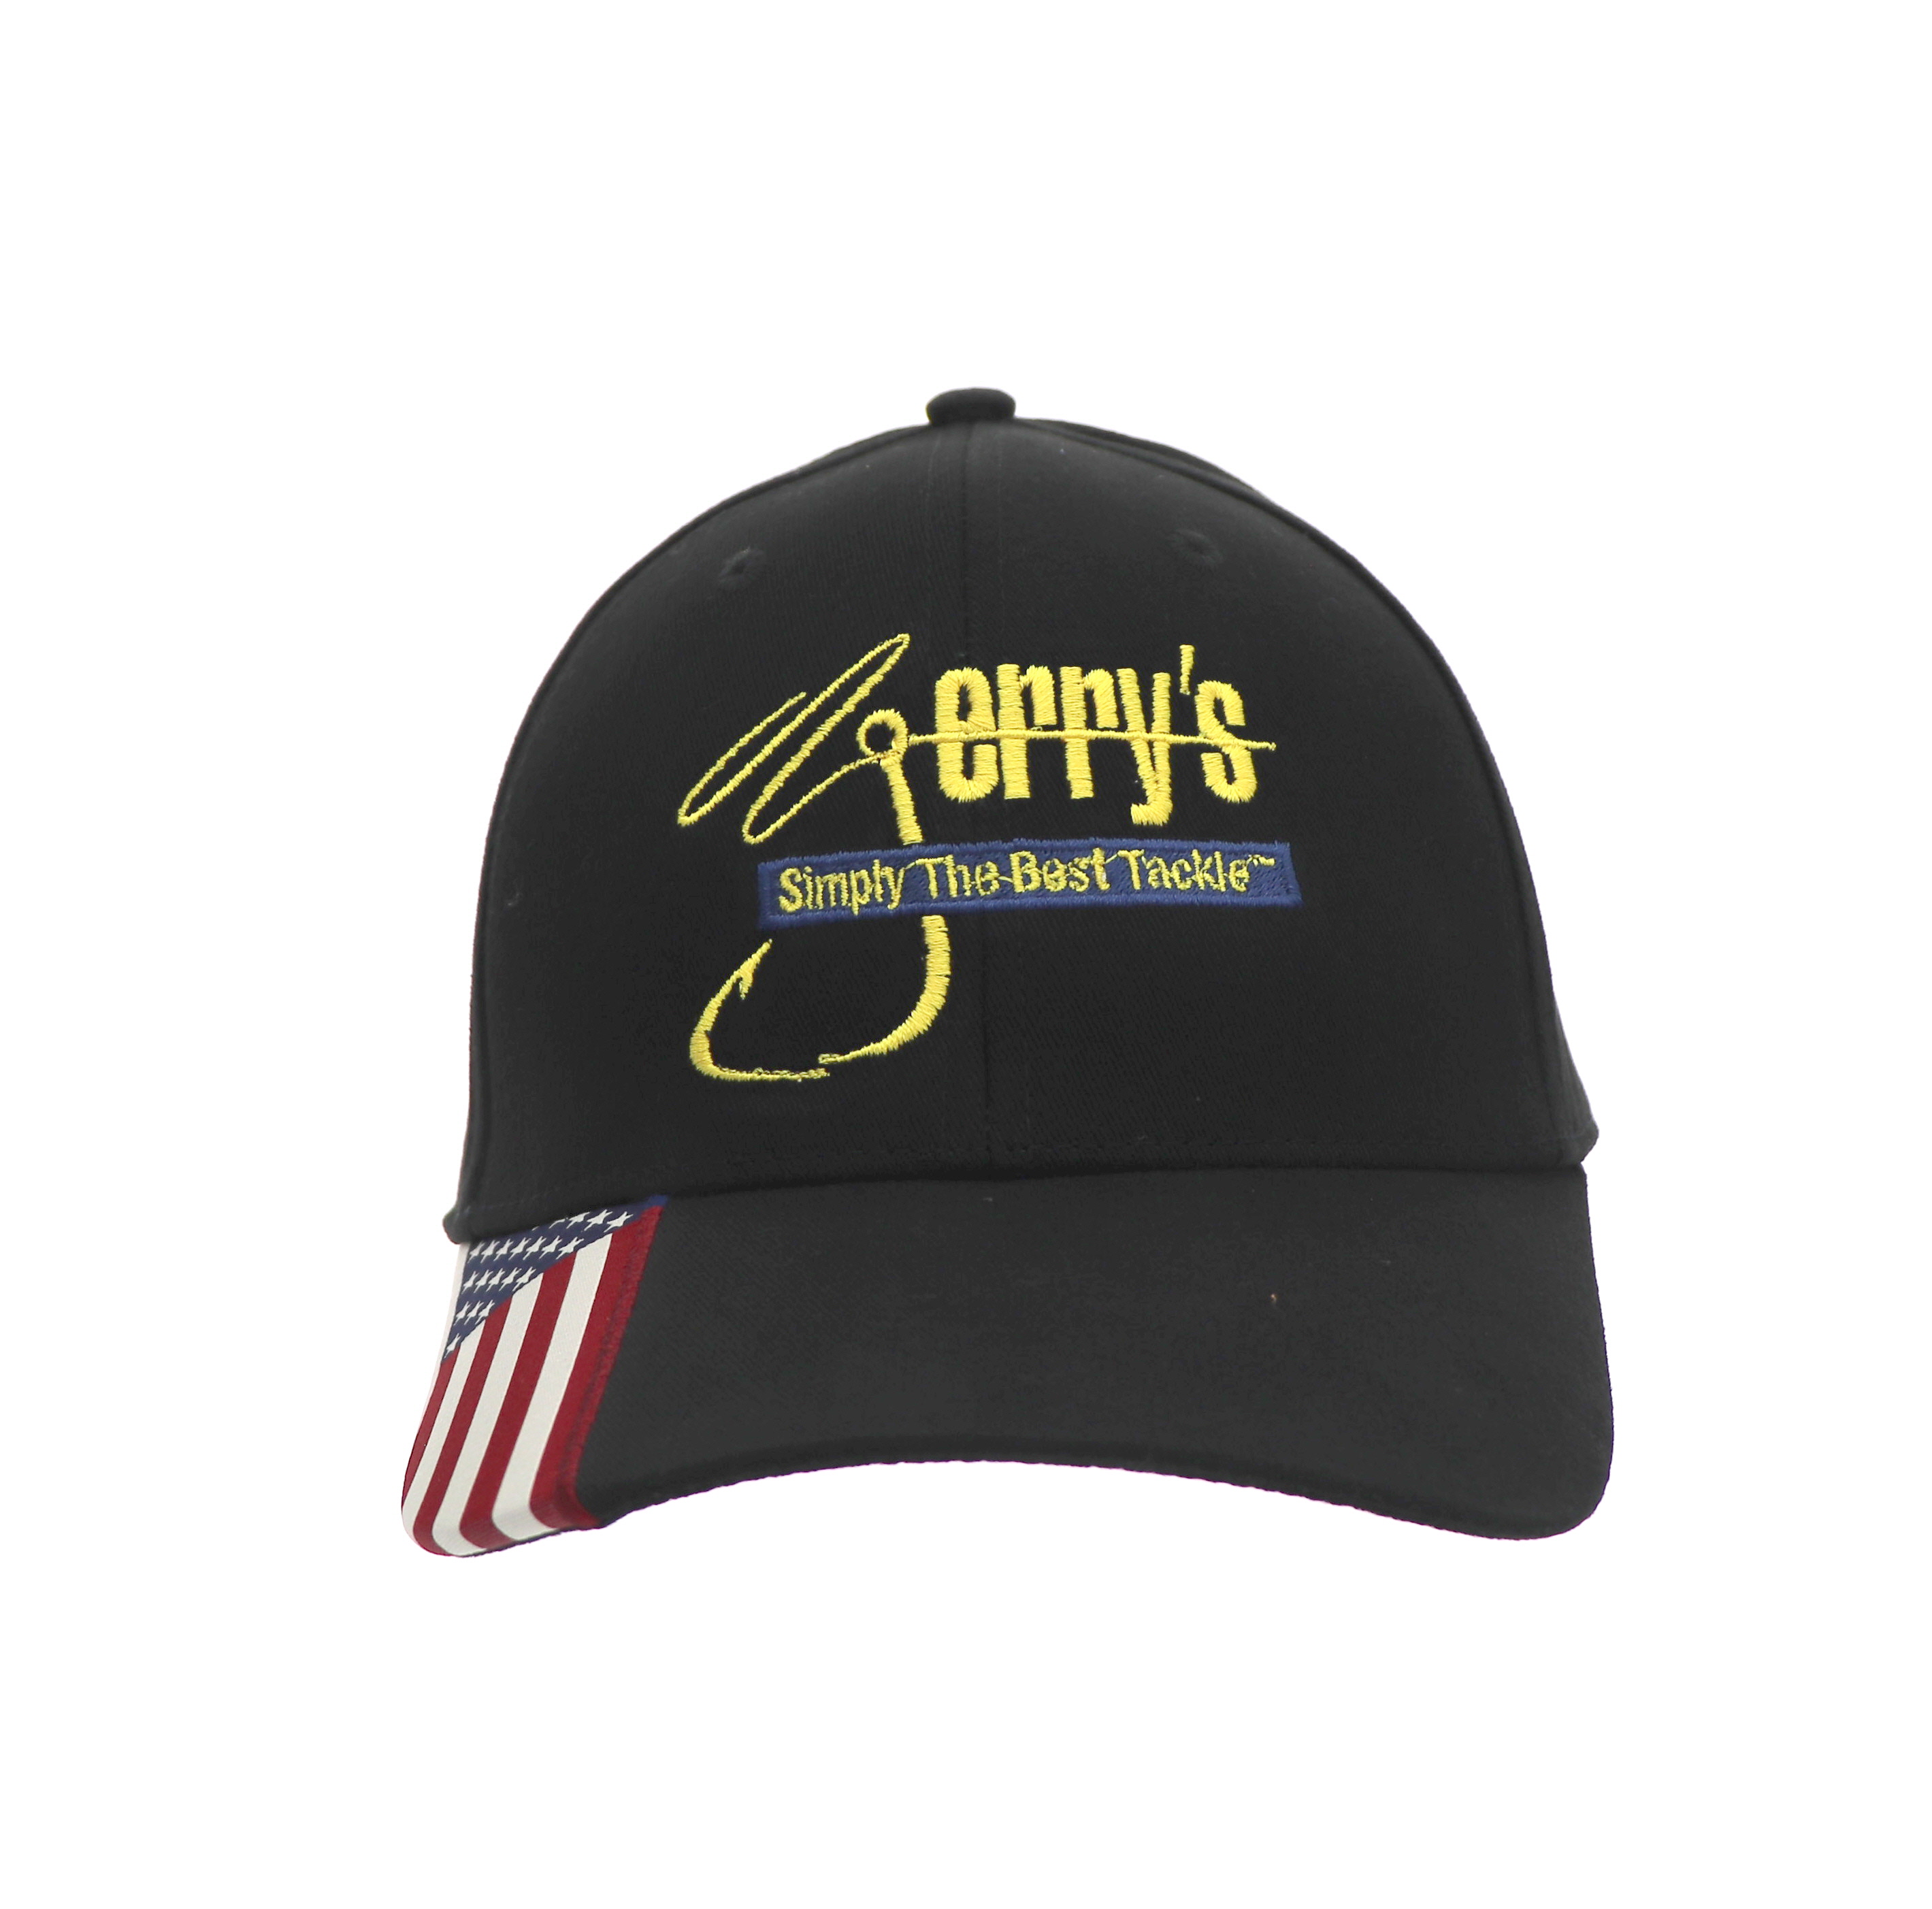 https://drycreekoutfitters.com/wp-content/uploads/2023/01/Jerrys-Black-Flag-hat.jpg